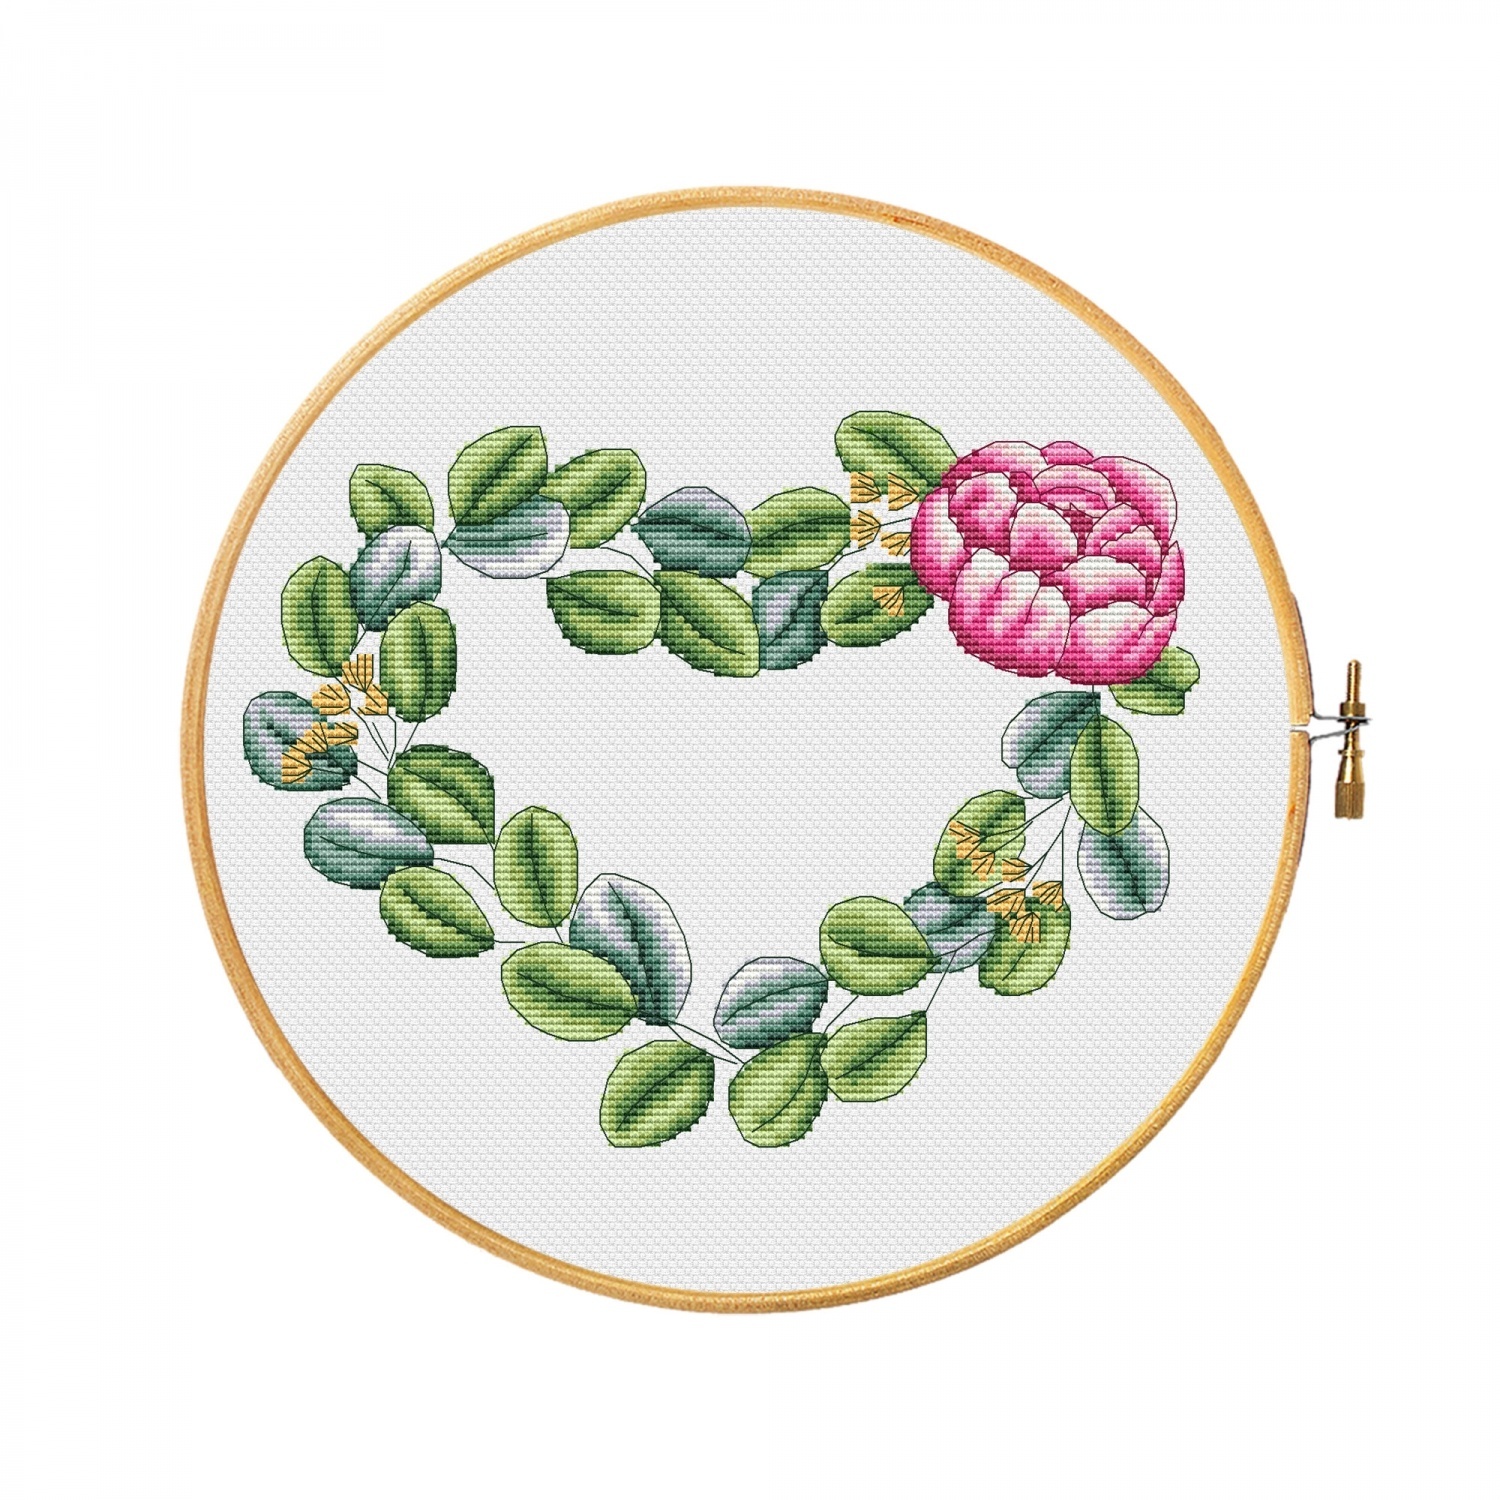 Floral Wreath Cross-Stitch Patterns